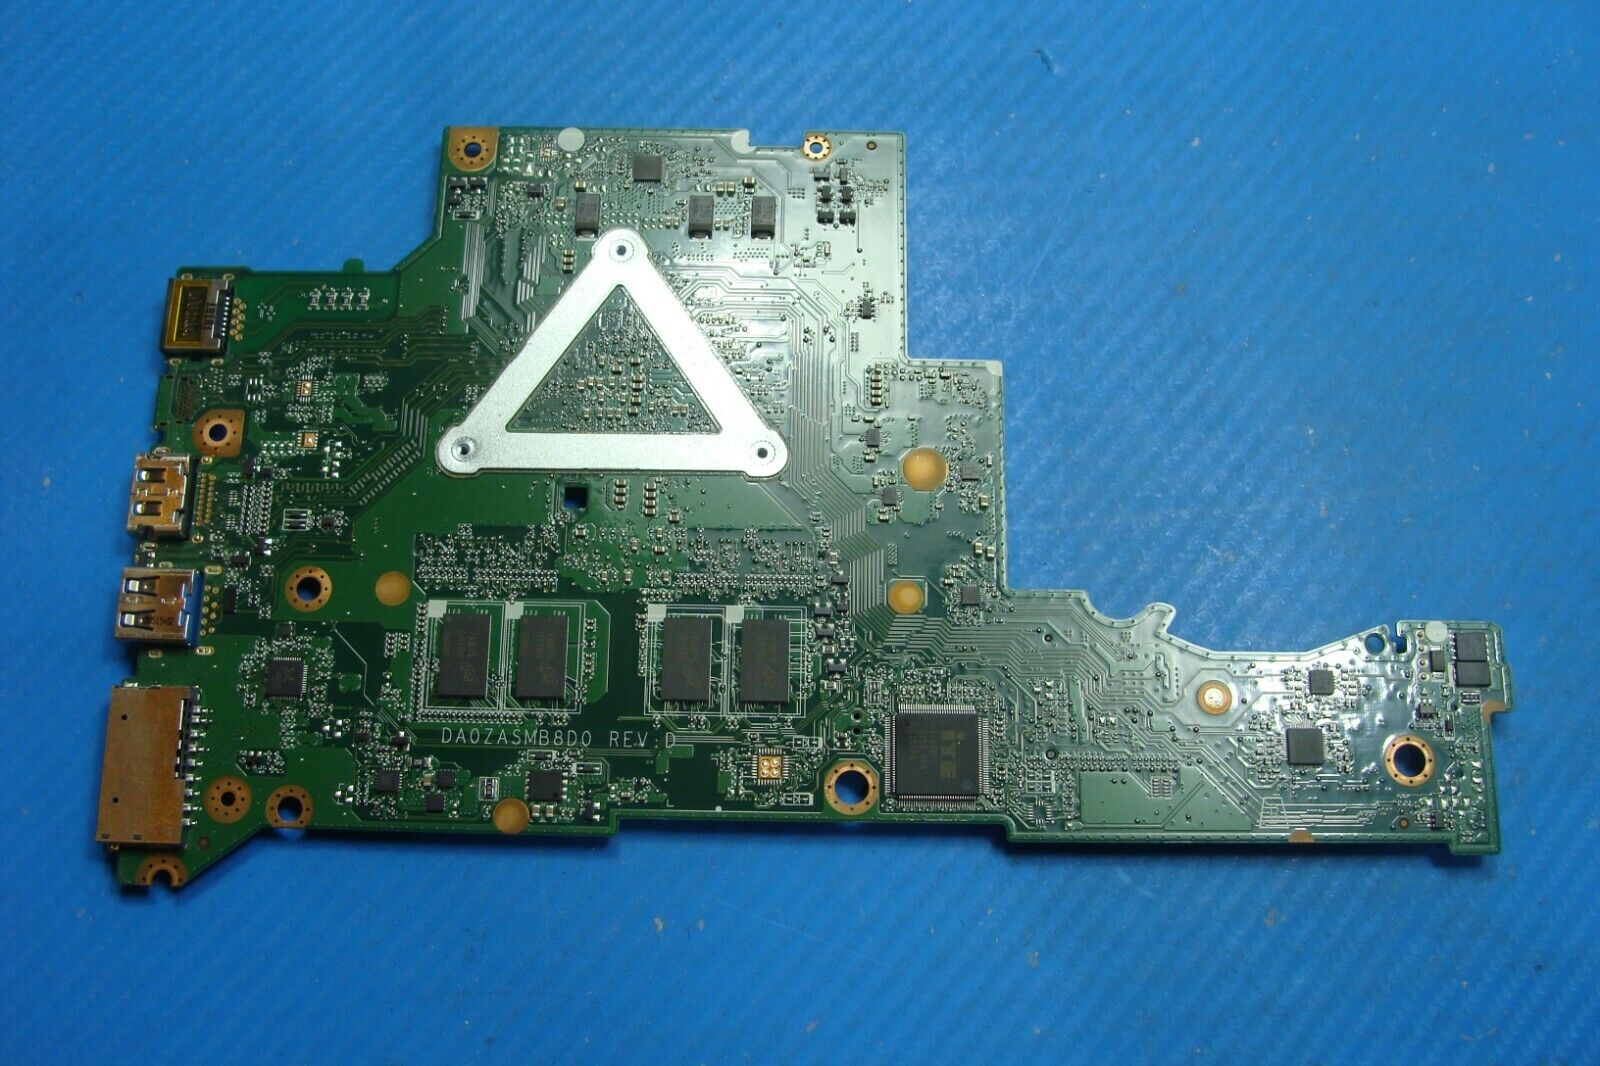 Acer Aspire 15.6